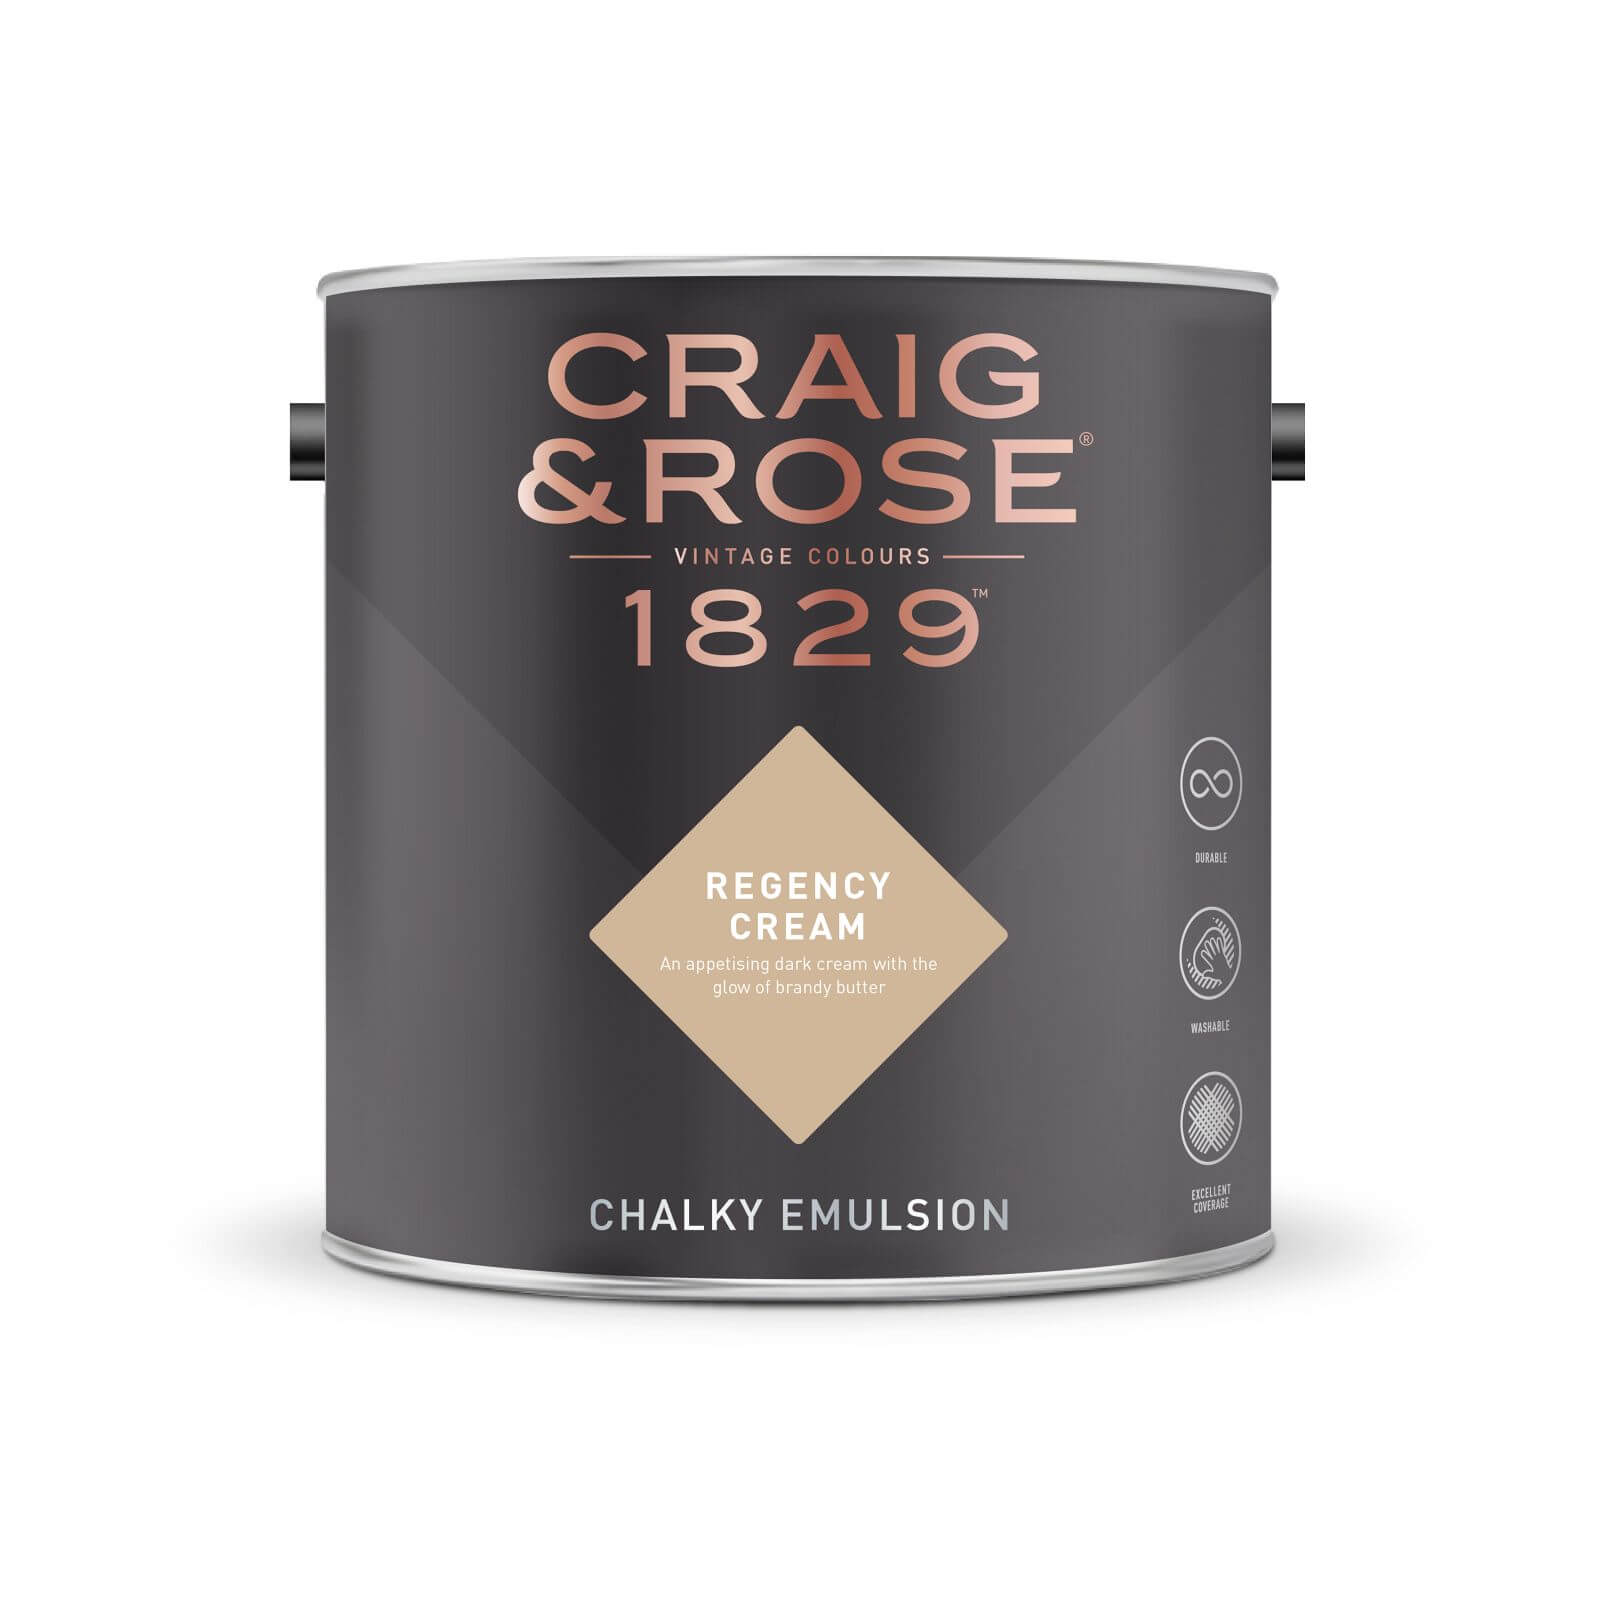 Craig & Rose 1829 Chalky Emulsion Paint Regency Cream - 5L